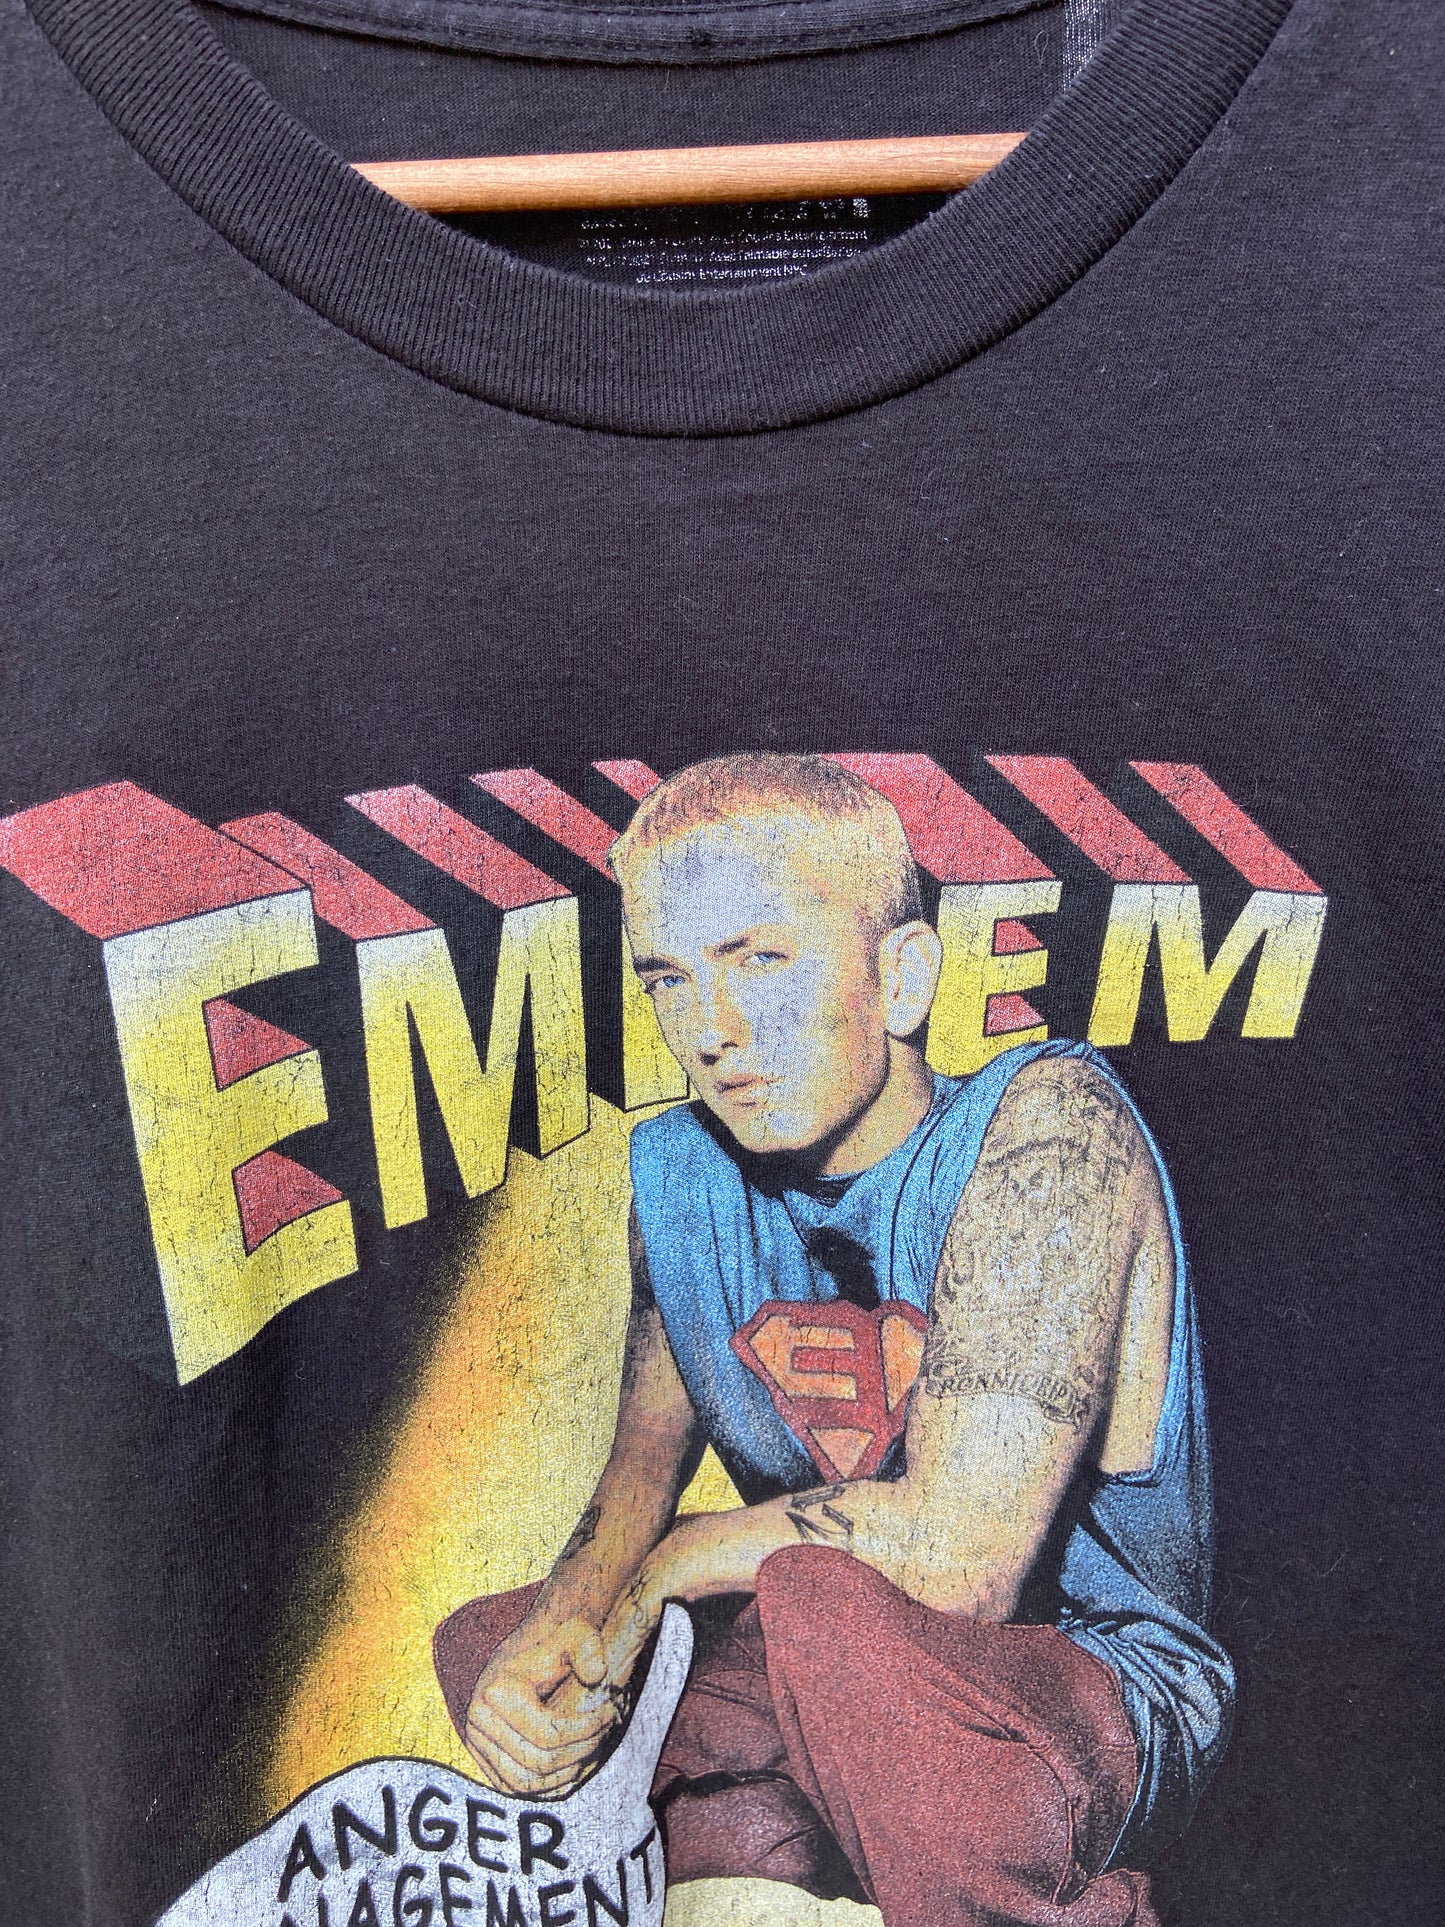 Rare Vintage 2002 Eminem Anger Management Tour Tee Black